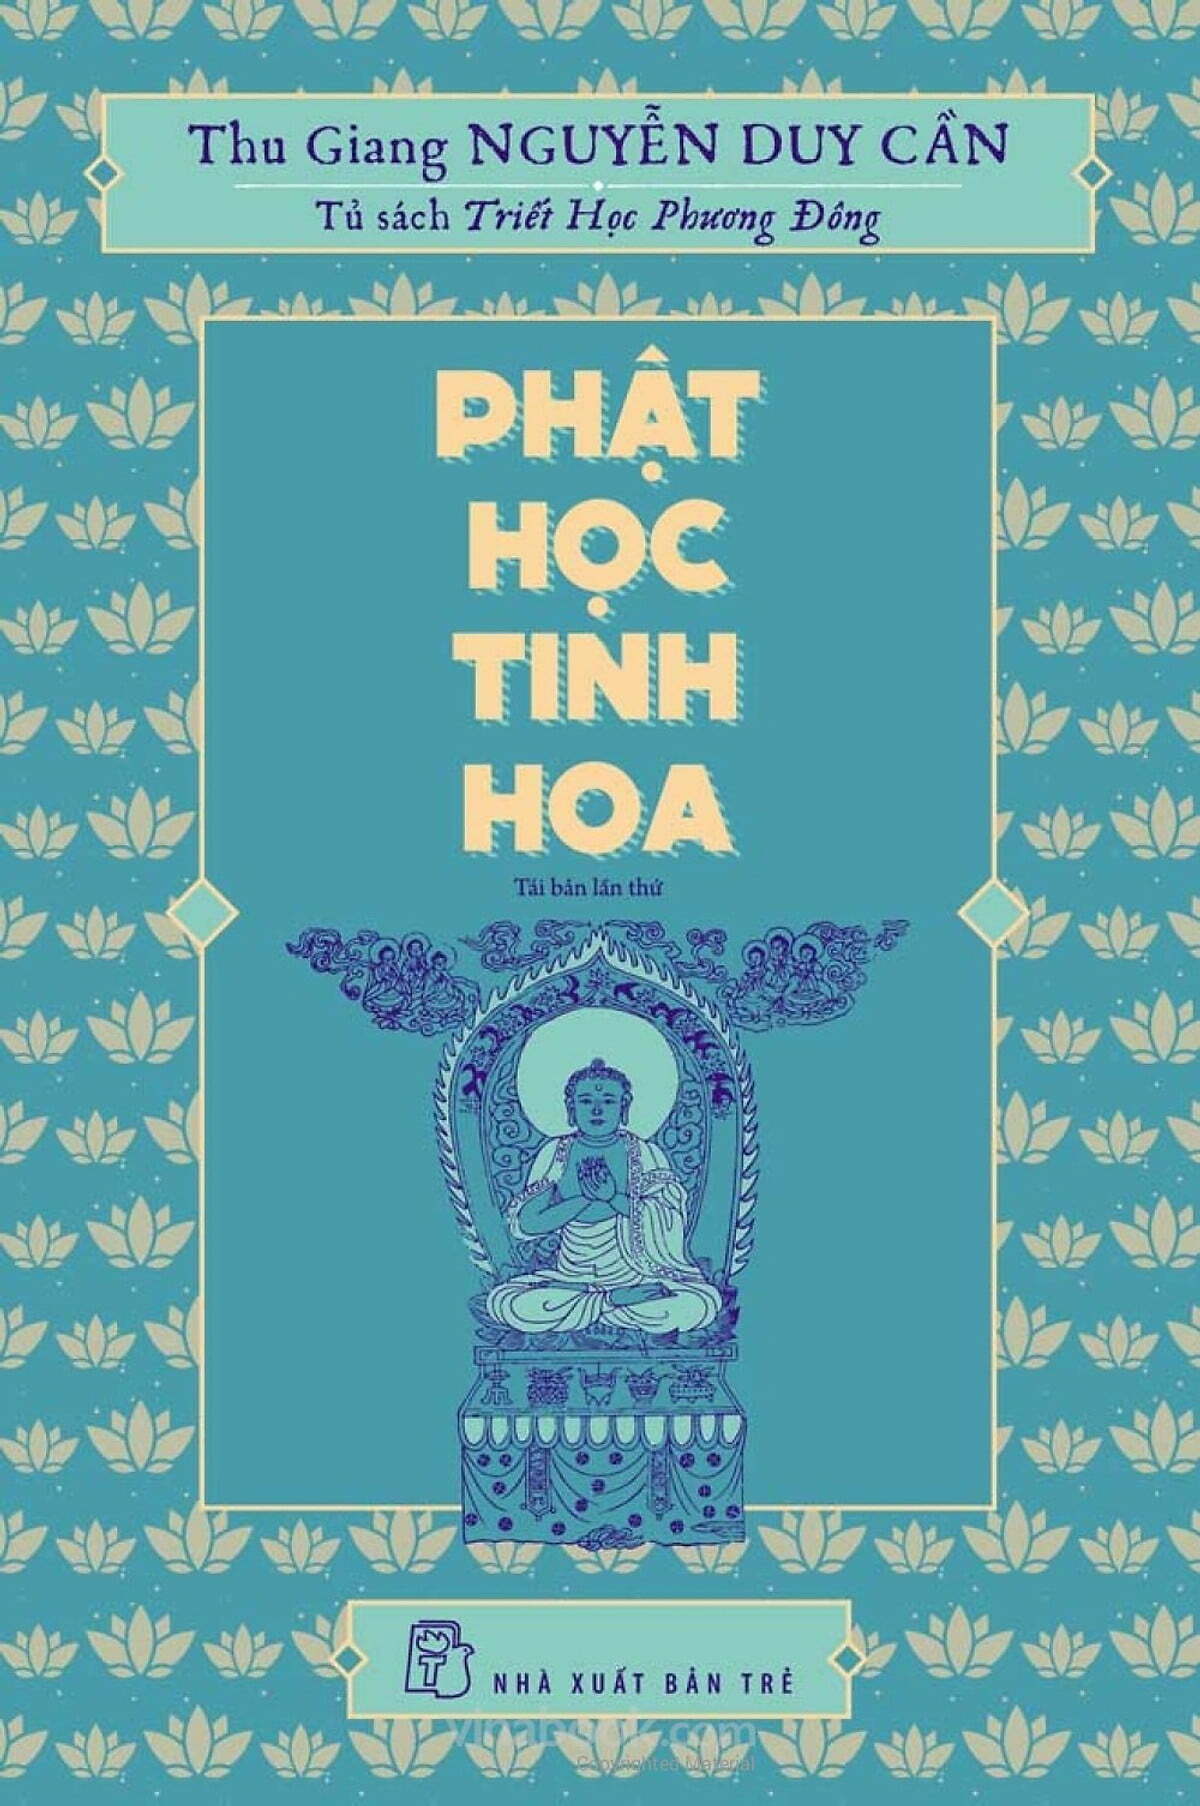 Phật học tinh hoa - Thu Giang Nguyễn Duy Cần